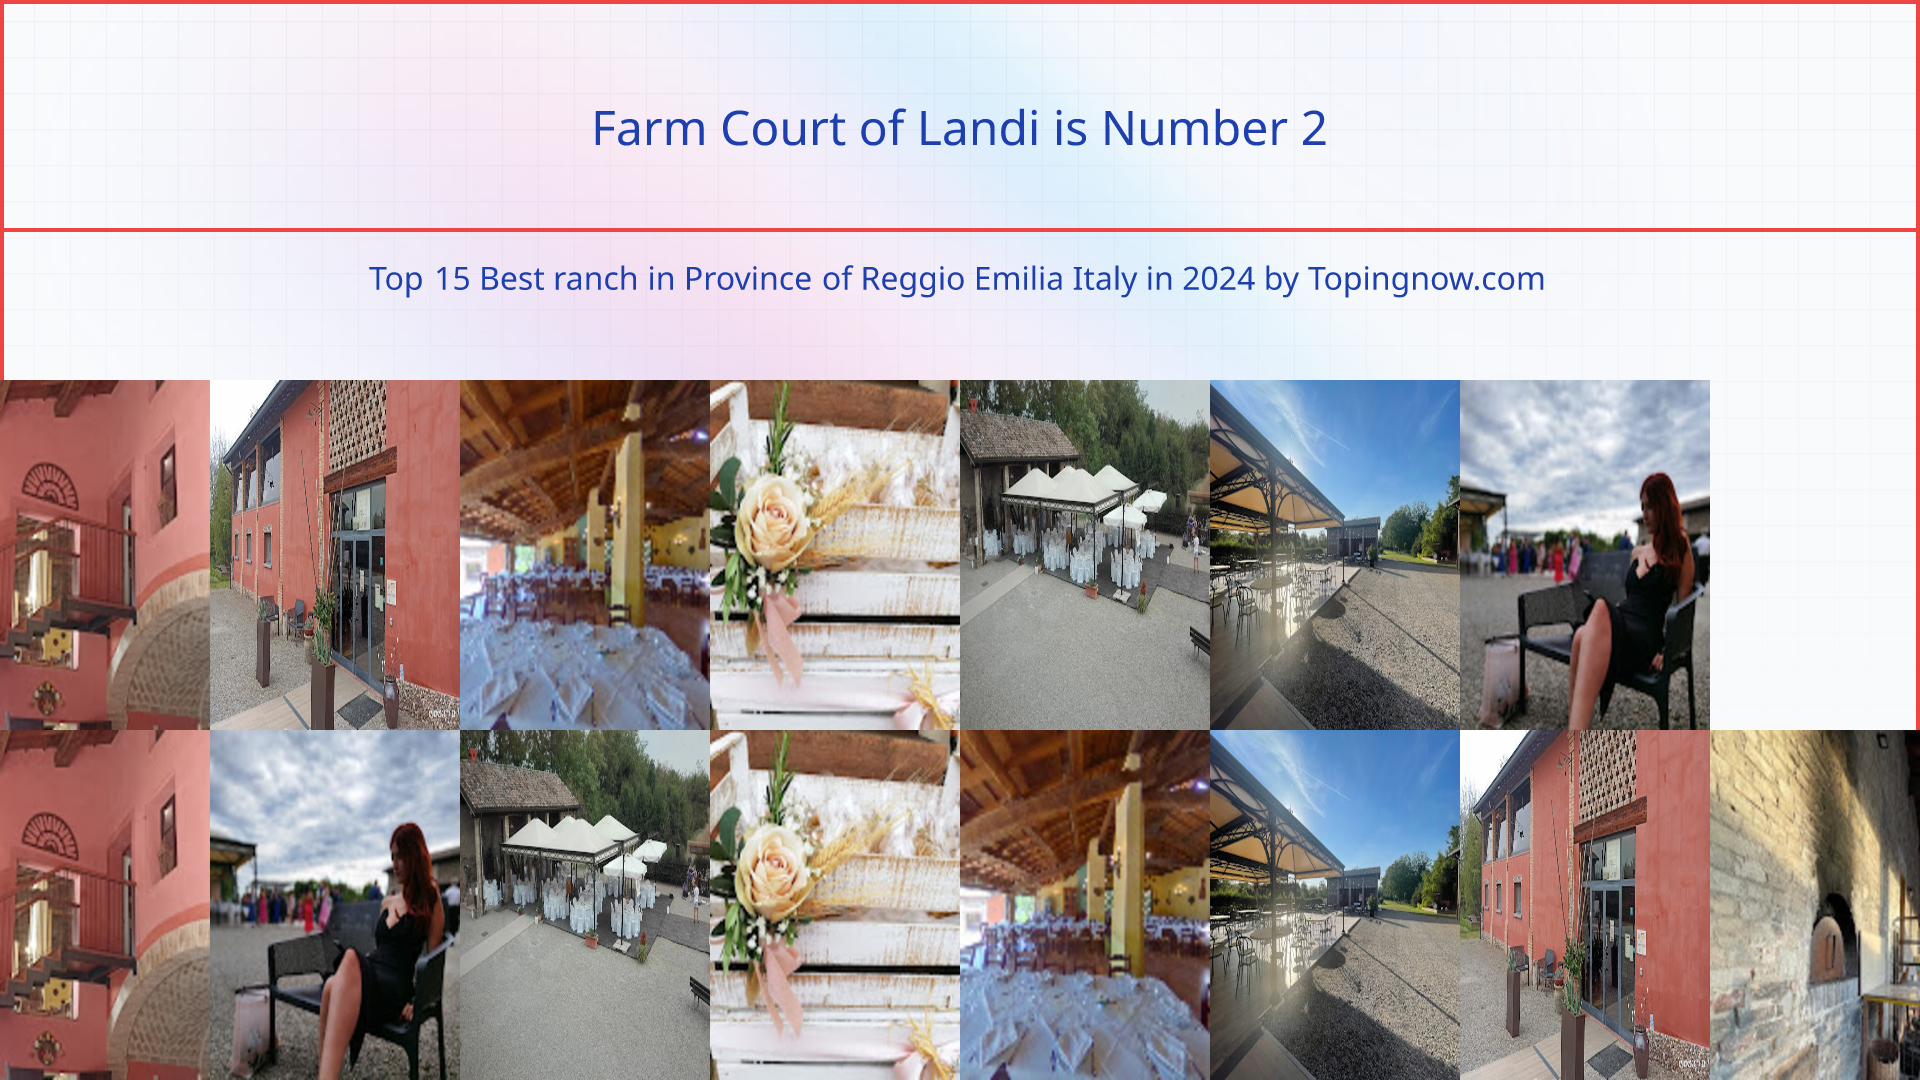 Farm Court of Landi: Top 15 Best ranch in Province of Reggio Emilia Italy in 2024